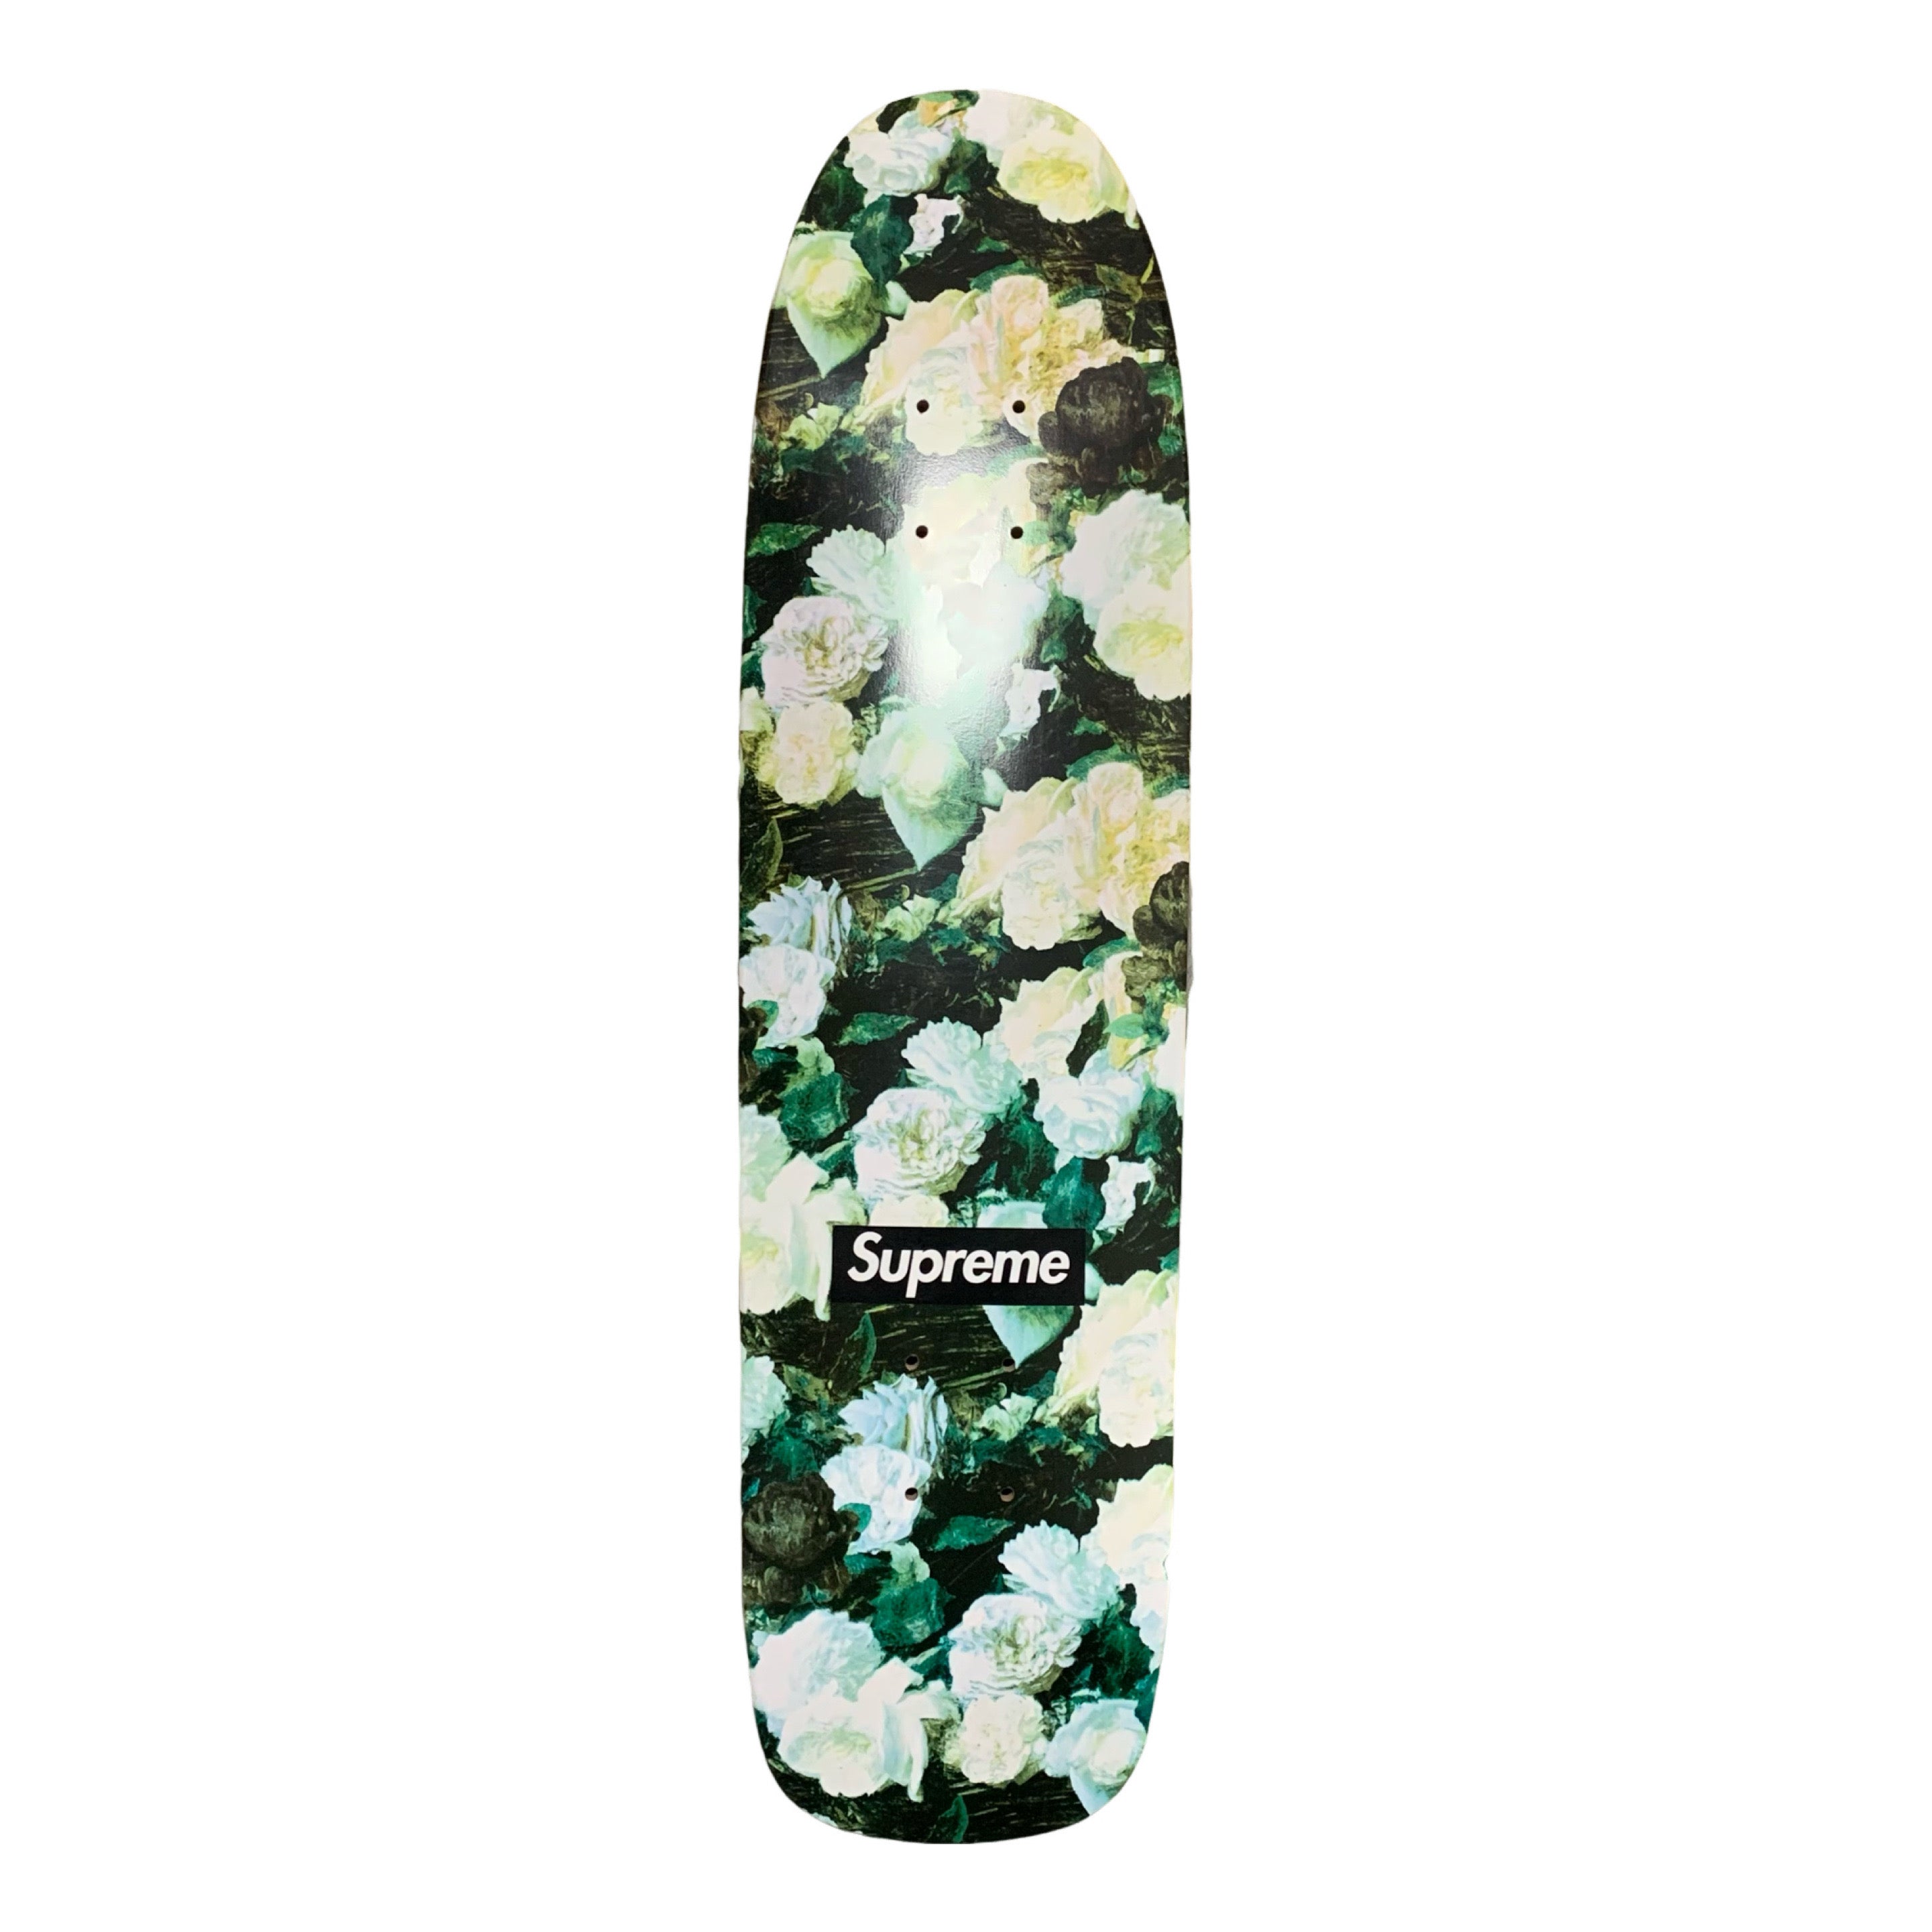 Supreme Skateboard Deck Floral PCL Power Corruption Lies Deck SS13 2013